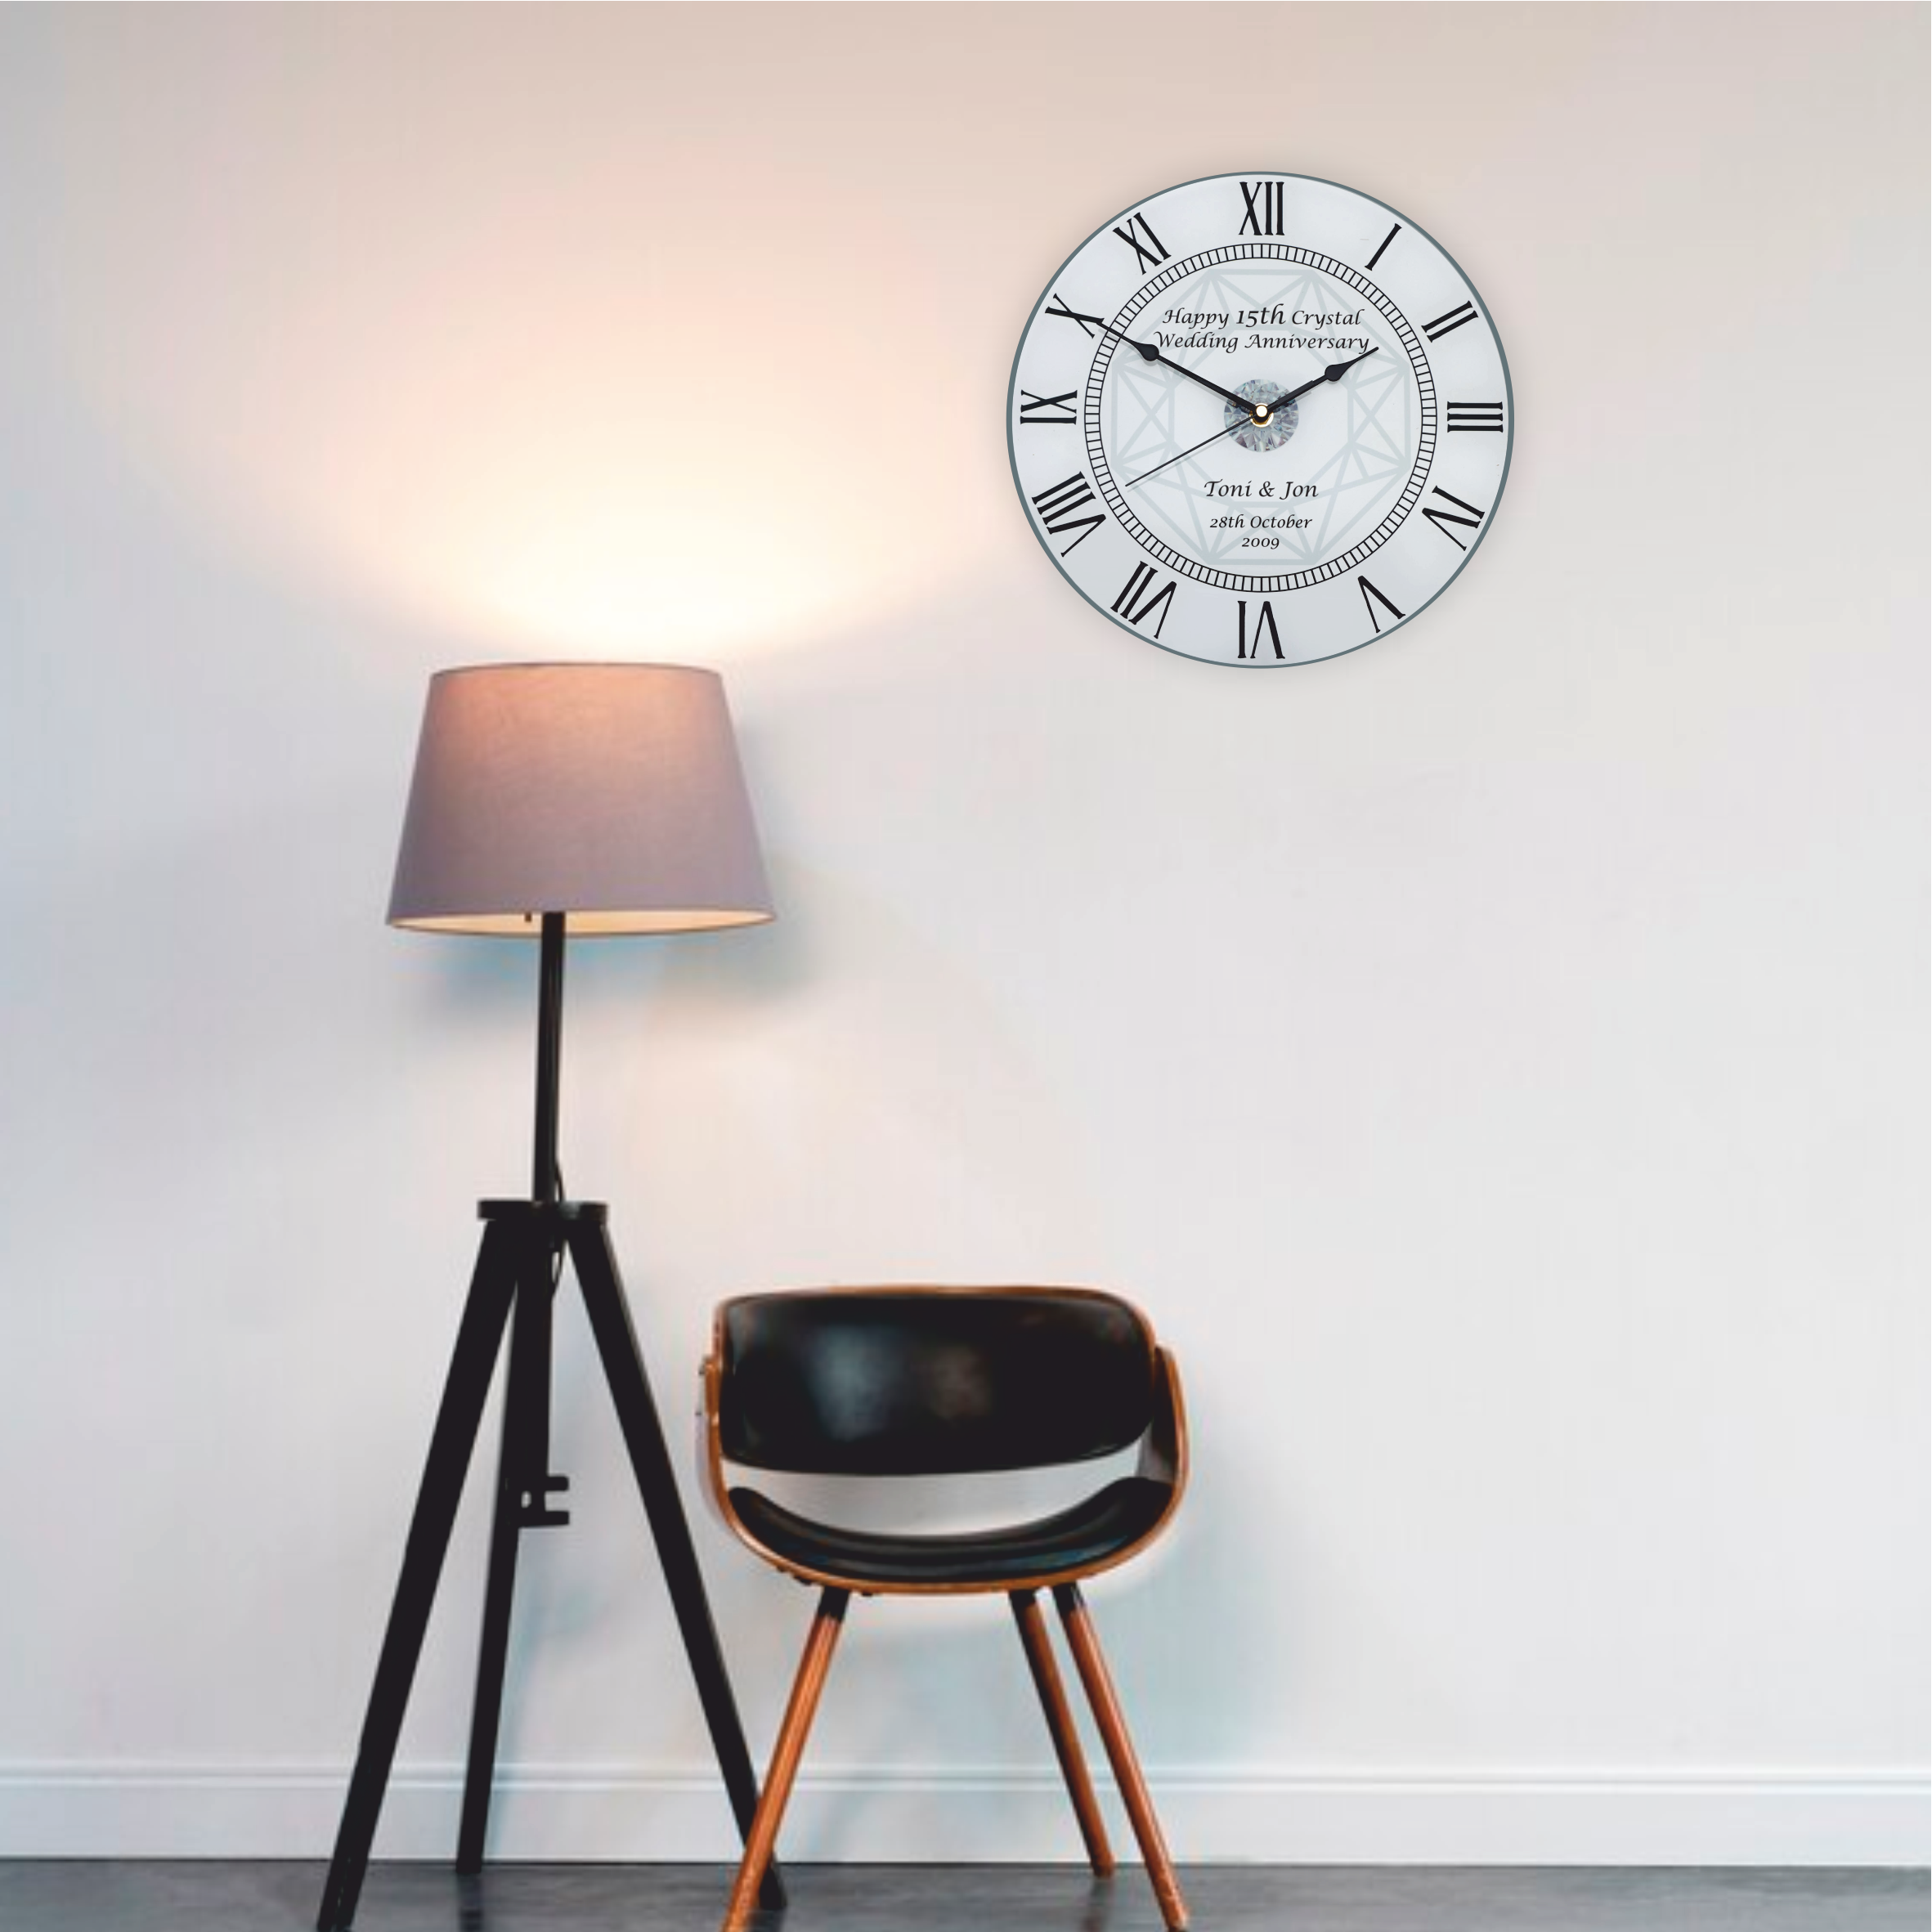 15th Crystal Wedding Anniversary Clock - Bespoke Personalised Anniversary Gift (30cm Silent Clock)